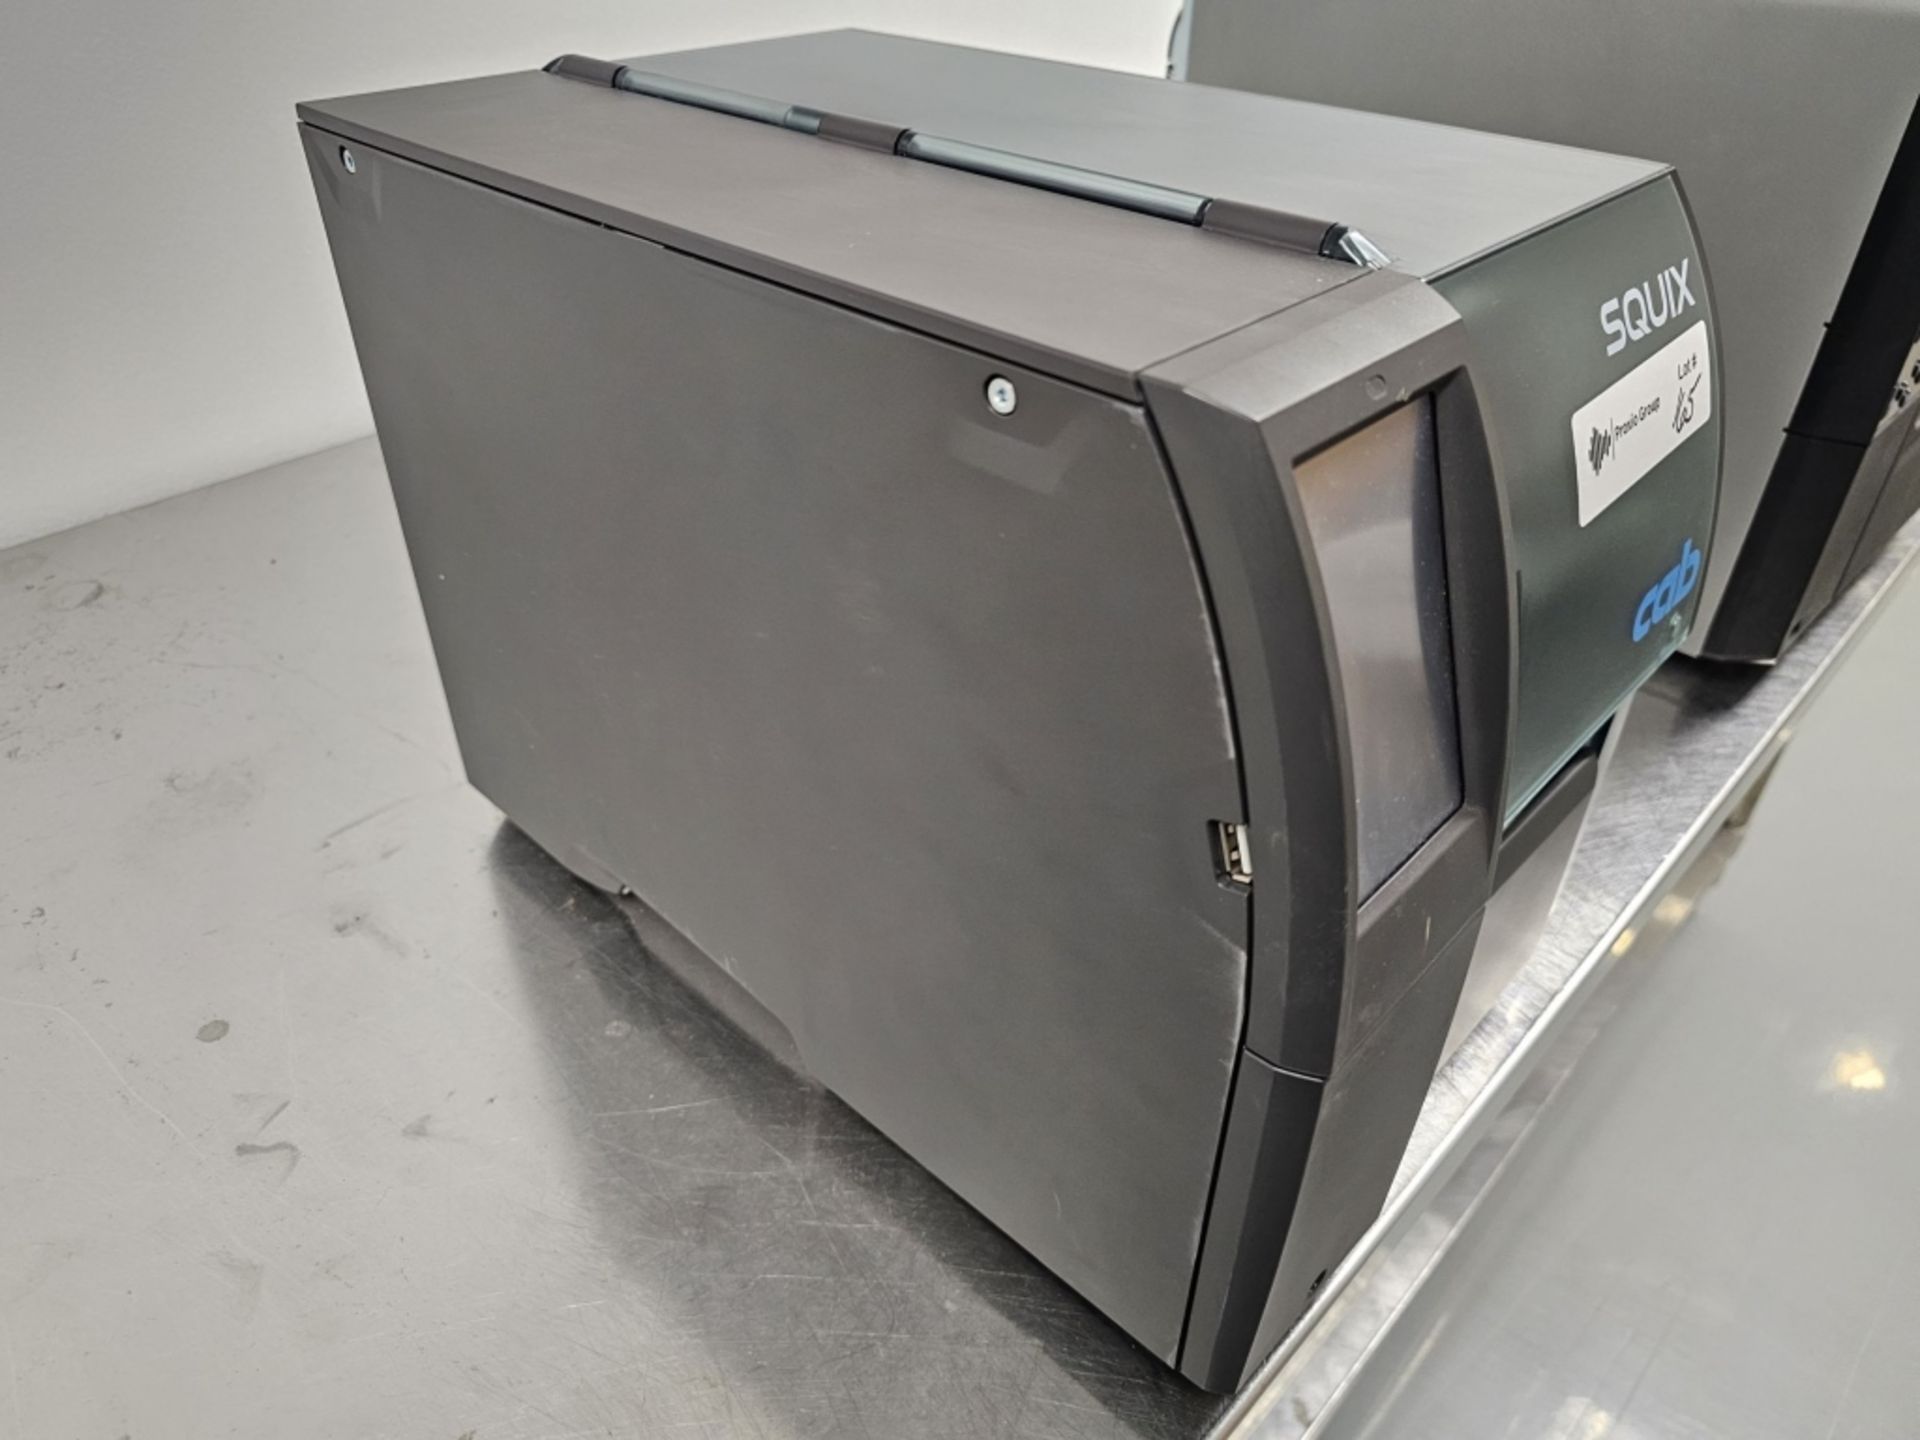 Squinx 4/600m thermal label printer - Image 5 of 6